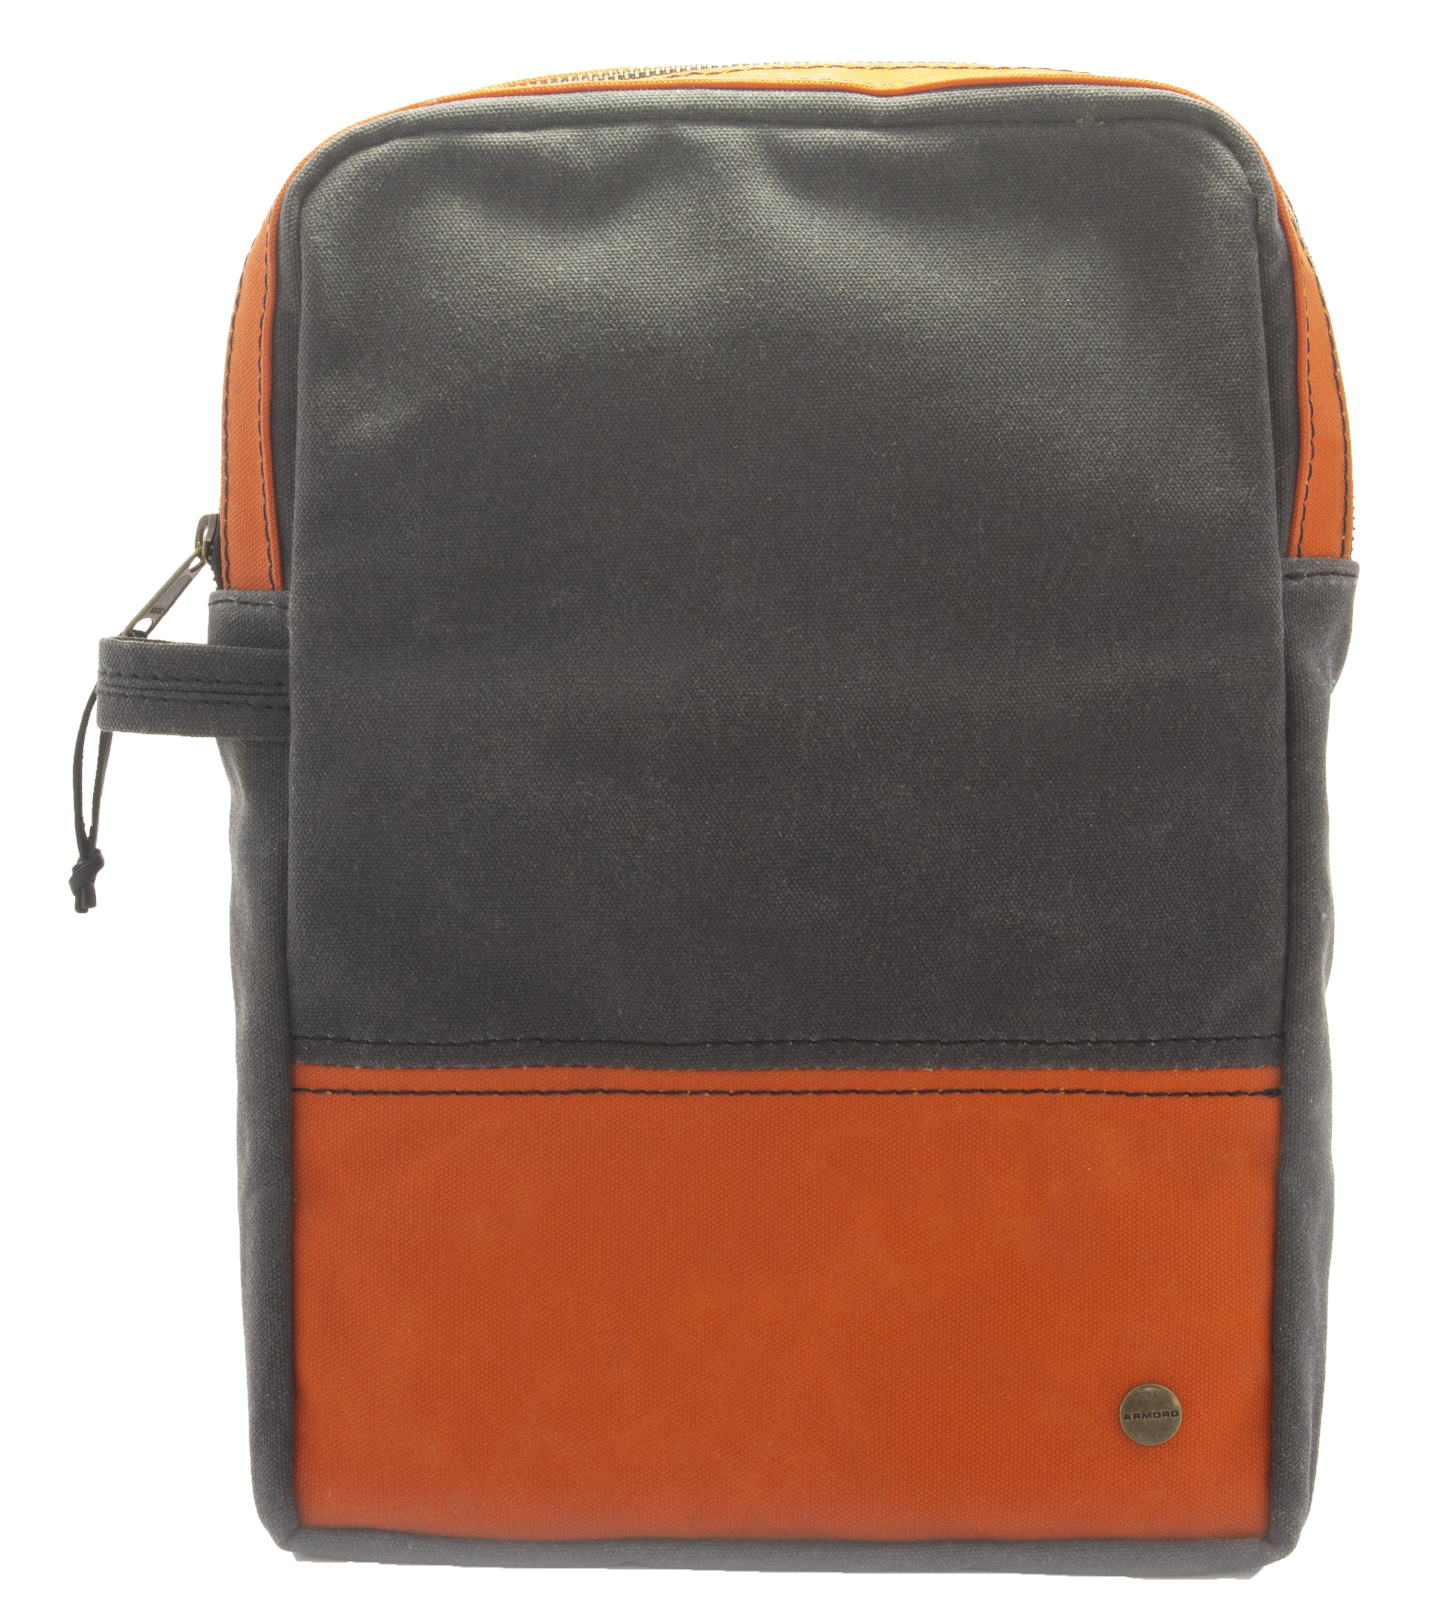 Canvas laptop sleeve bag armoro